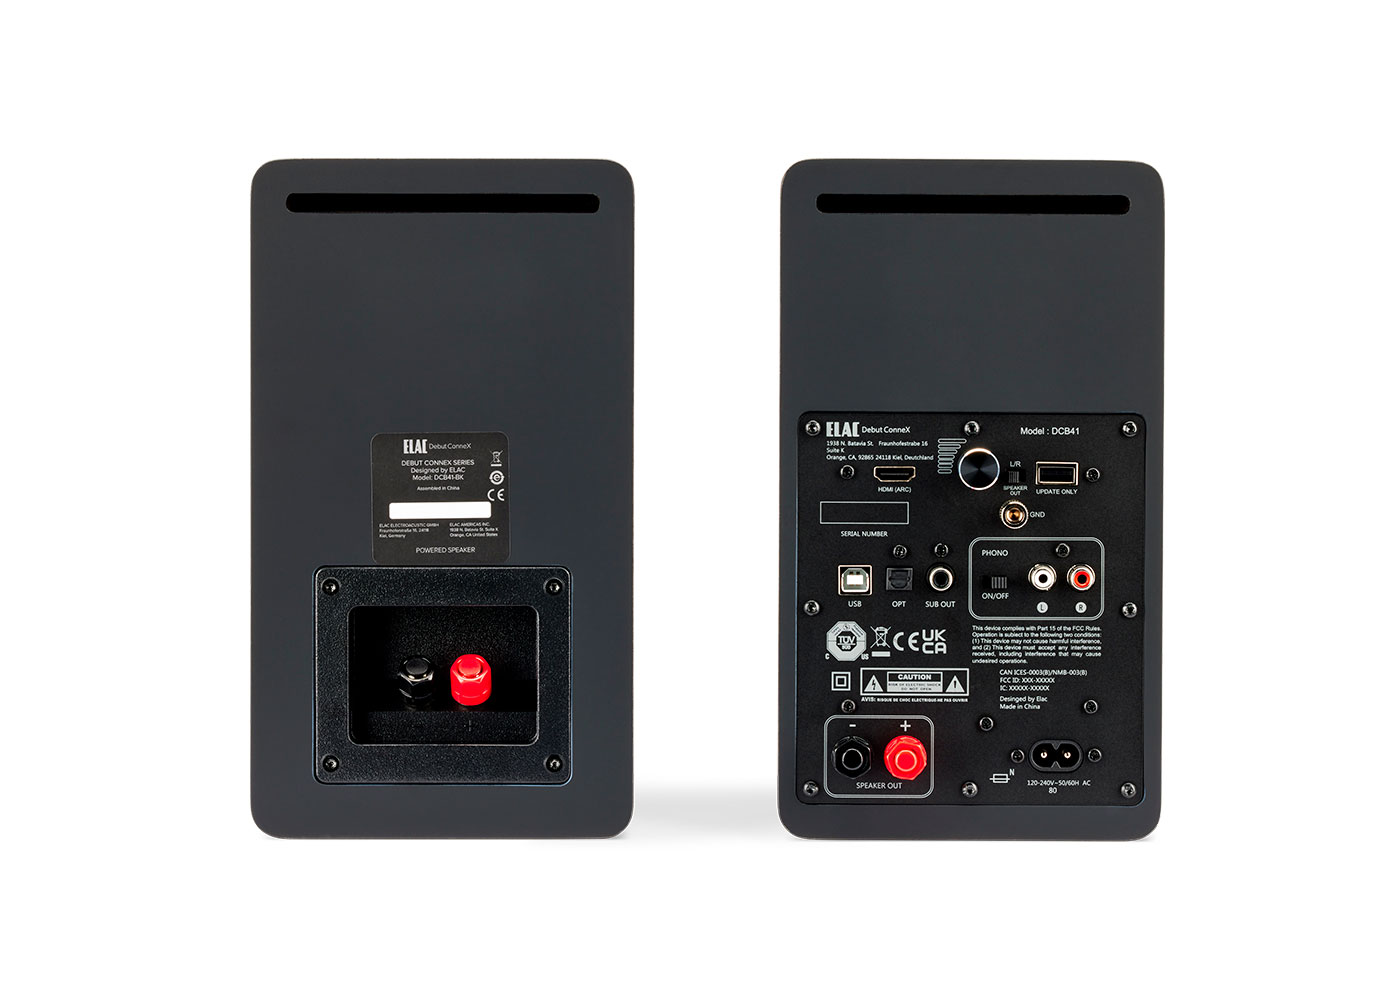 Debut Connex Dcb-41 
Powered Speakers (Black)